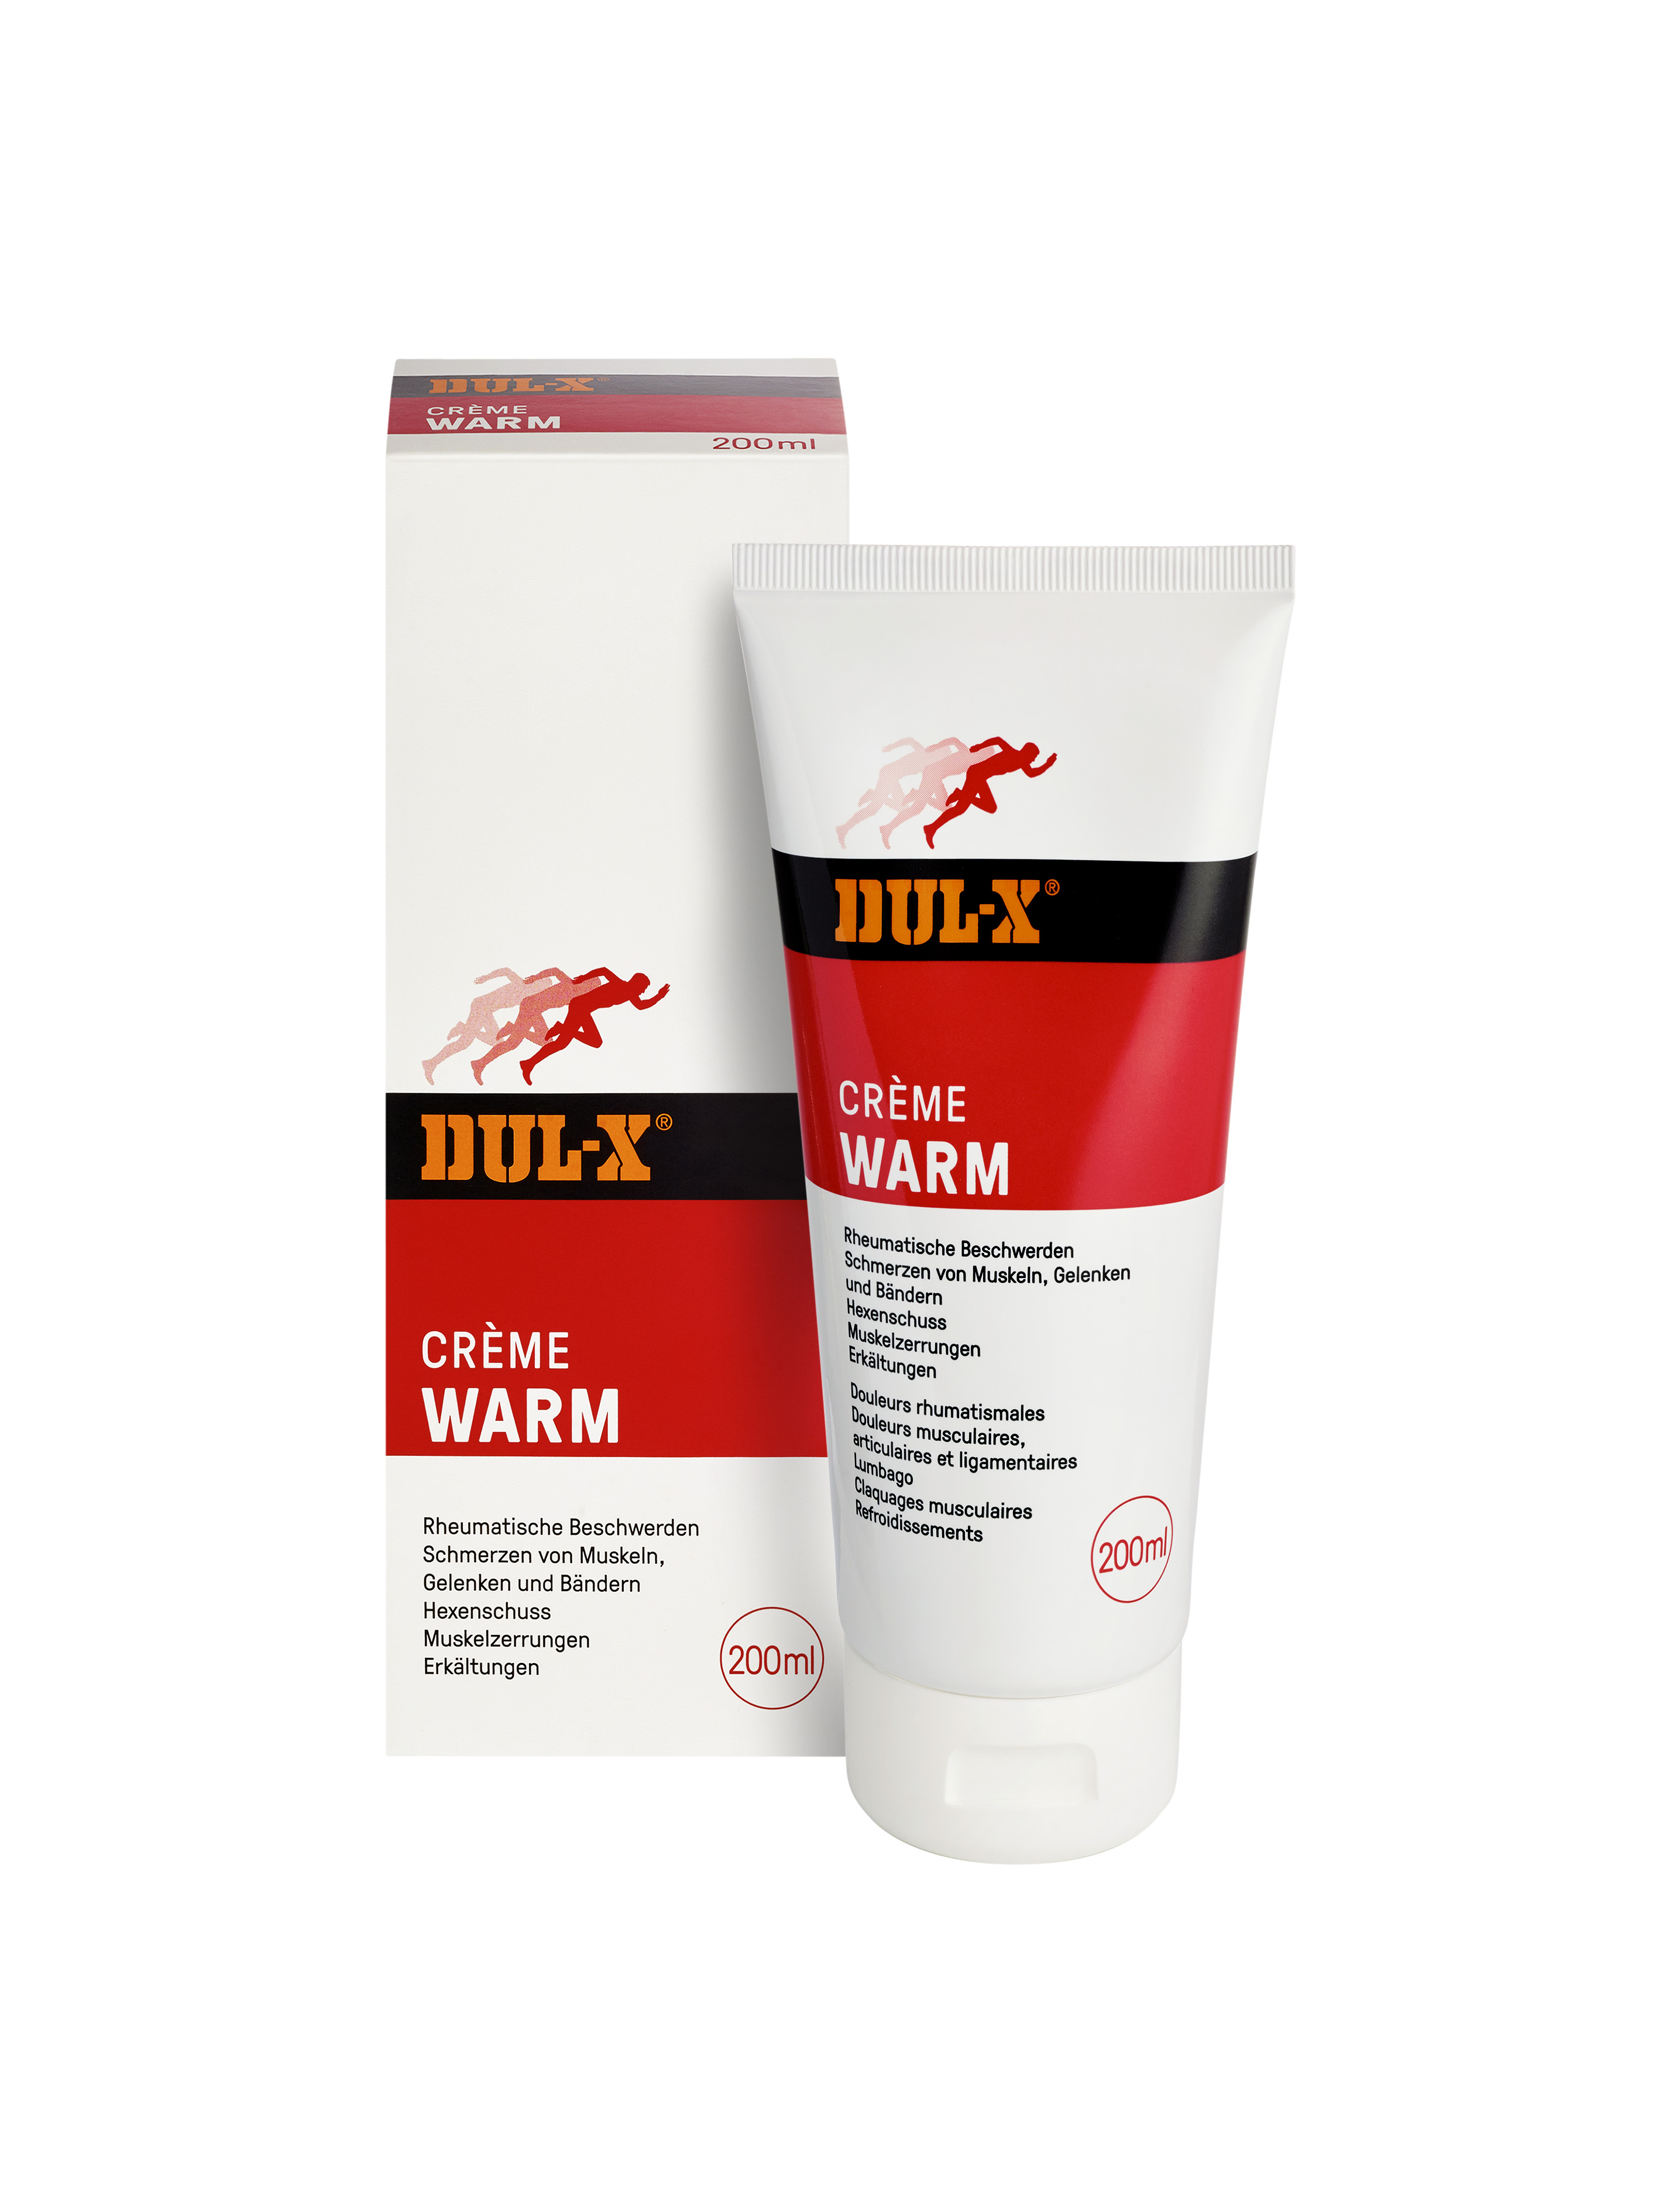 DUL-X crème warm tb 200 ml, image principale